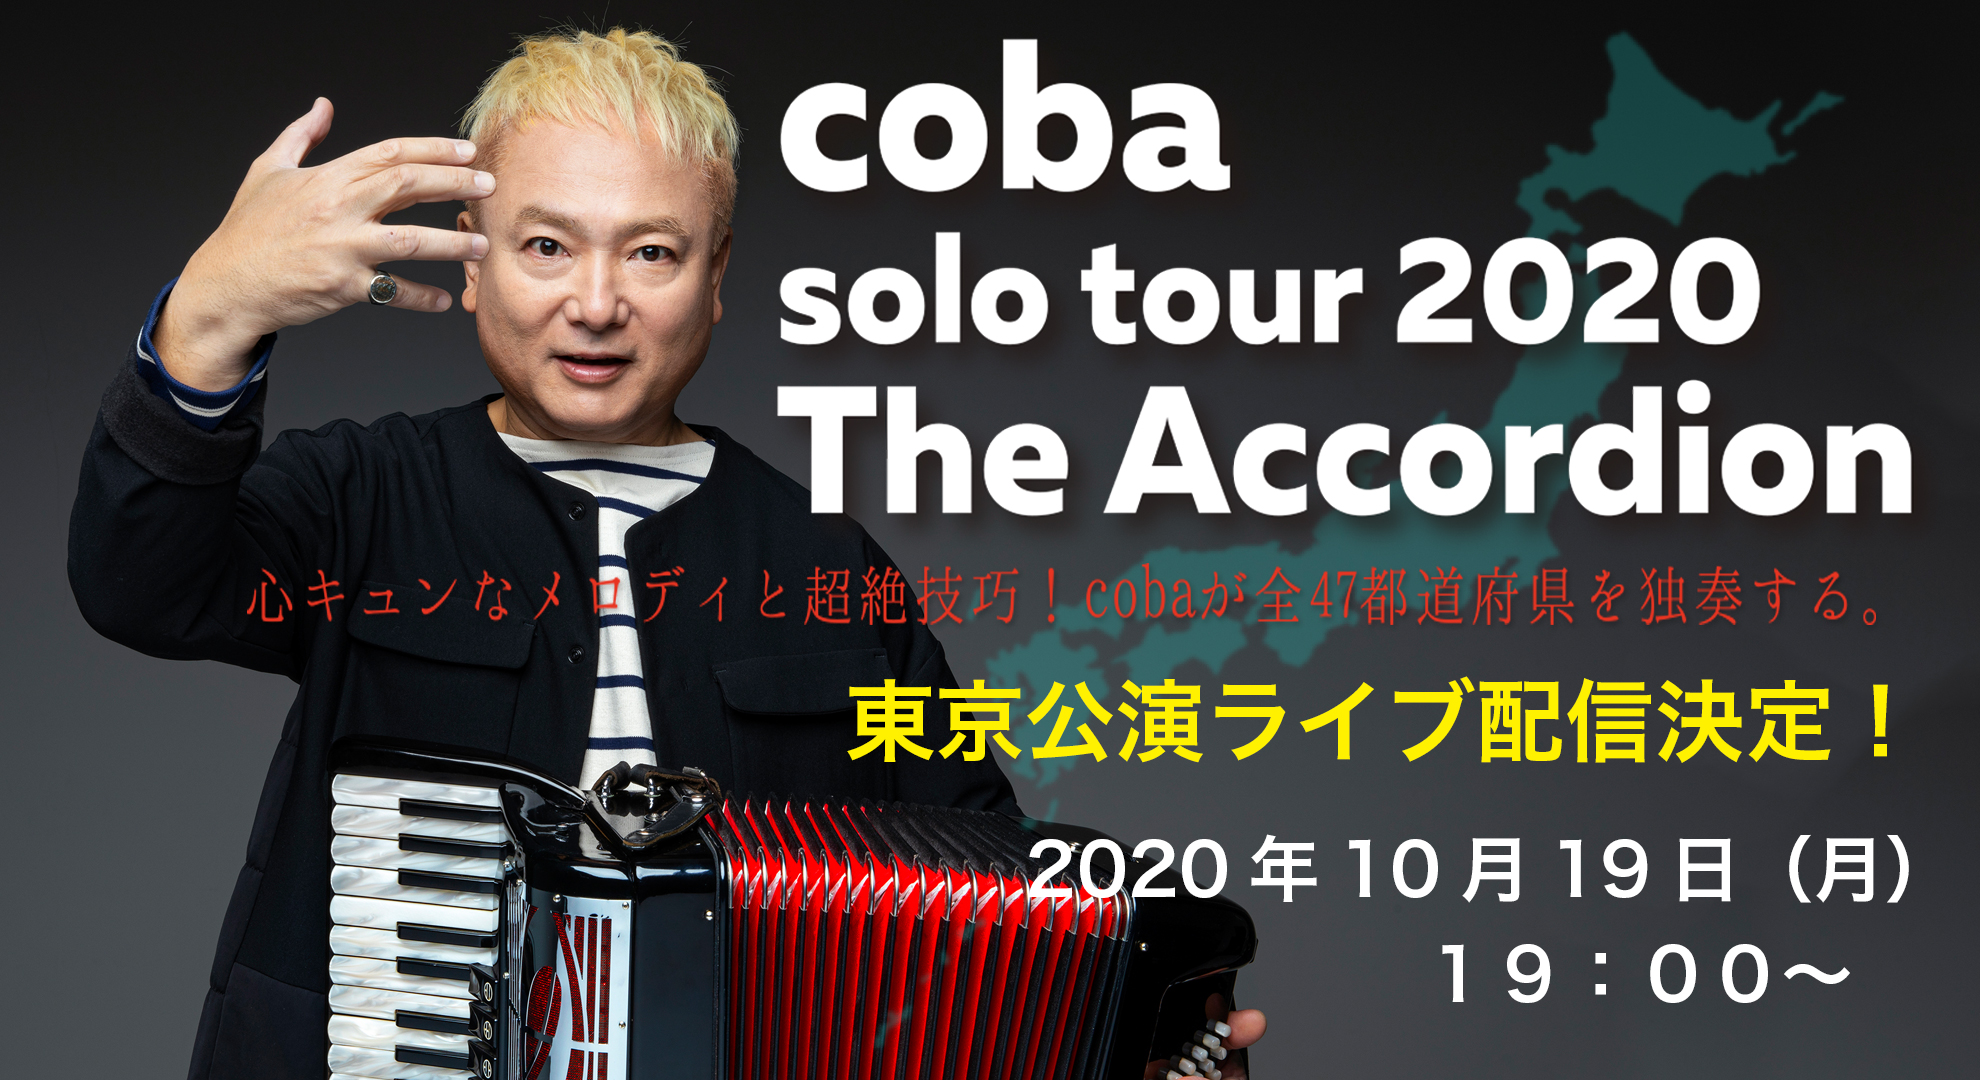 Coba Solo Tour 2020 The Accordion 東京公演 Streaming 配信 Coba